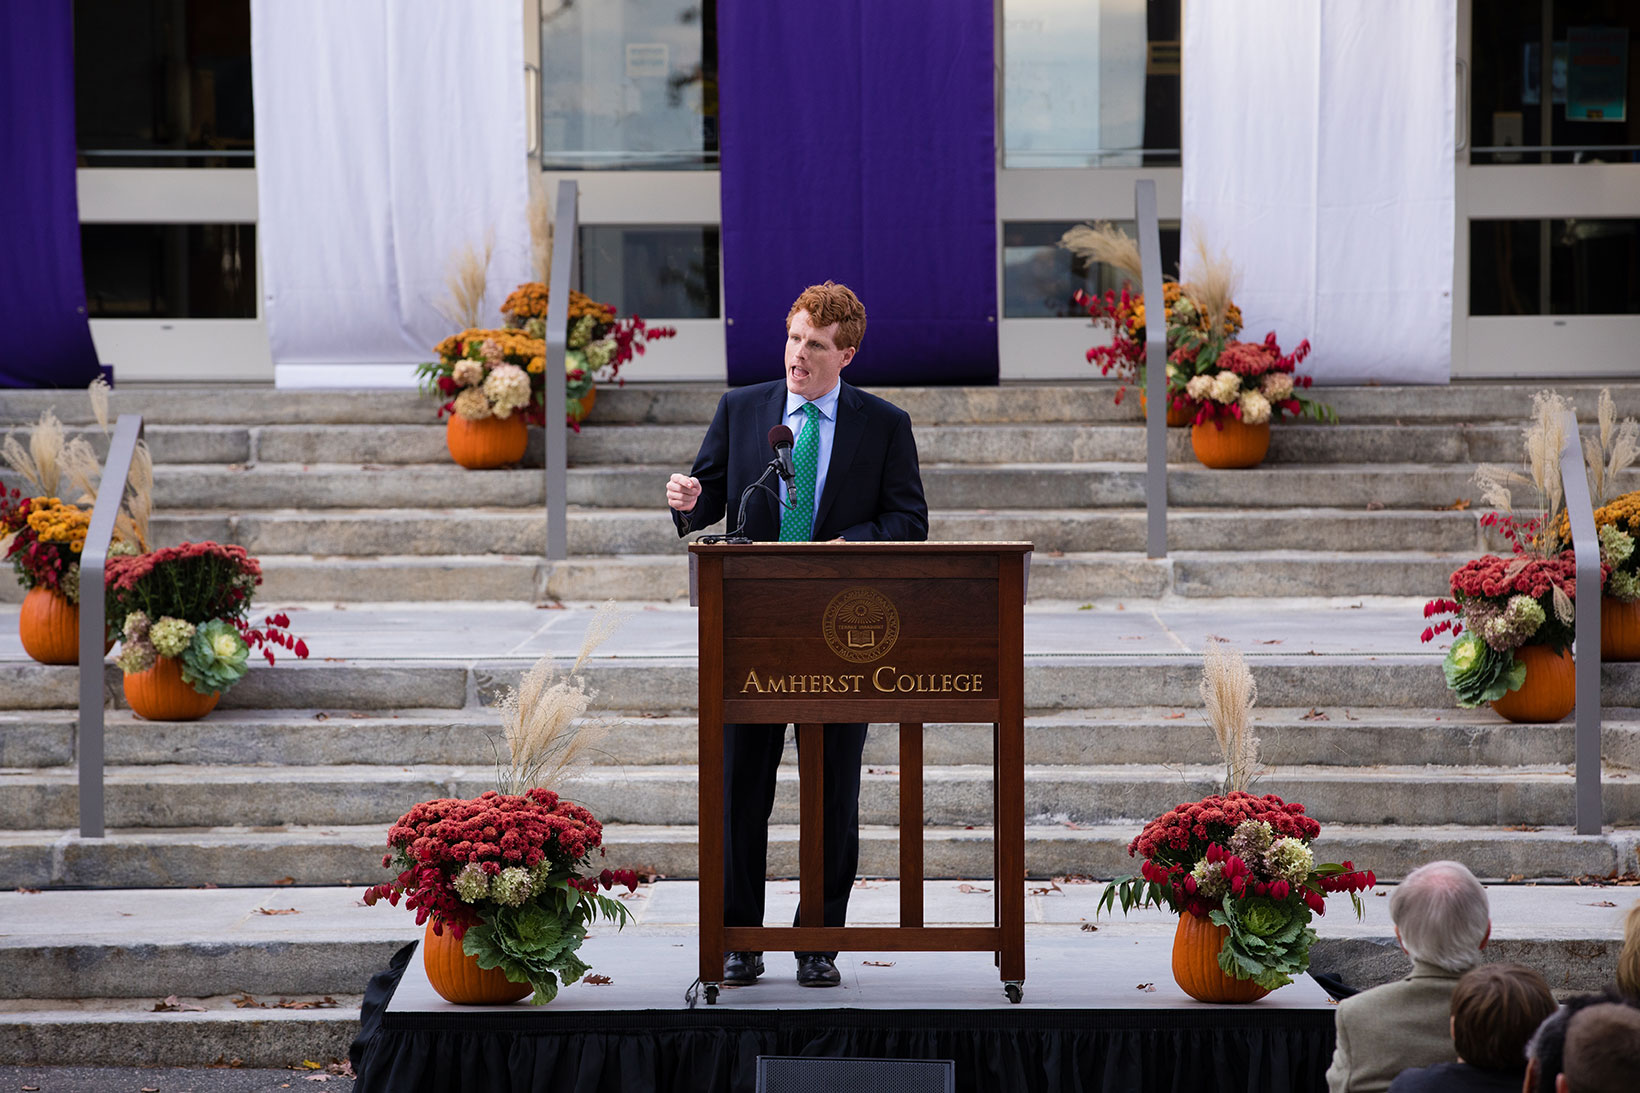 U.S. Rep. Joseph Kennedy III speaking at Amherst College Oct. 29, 2017